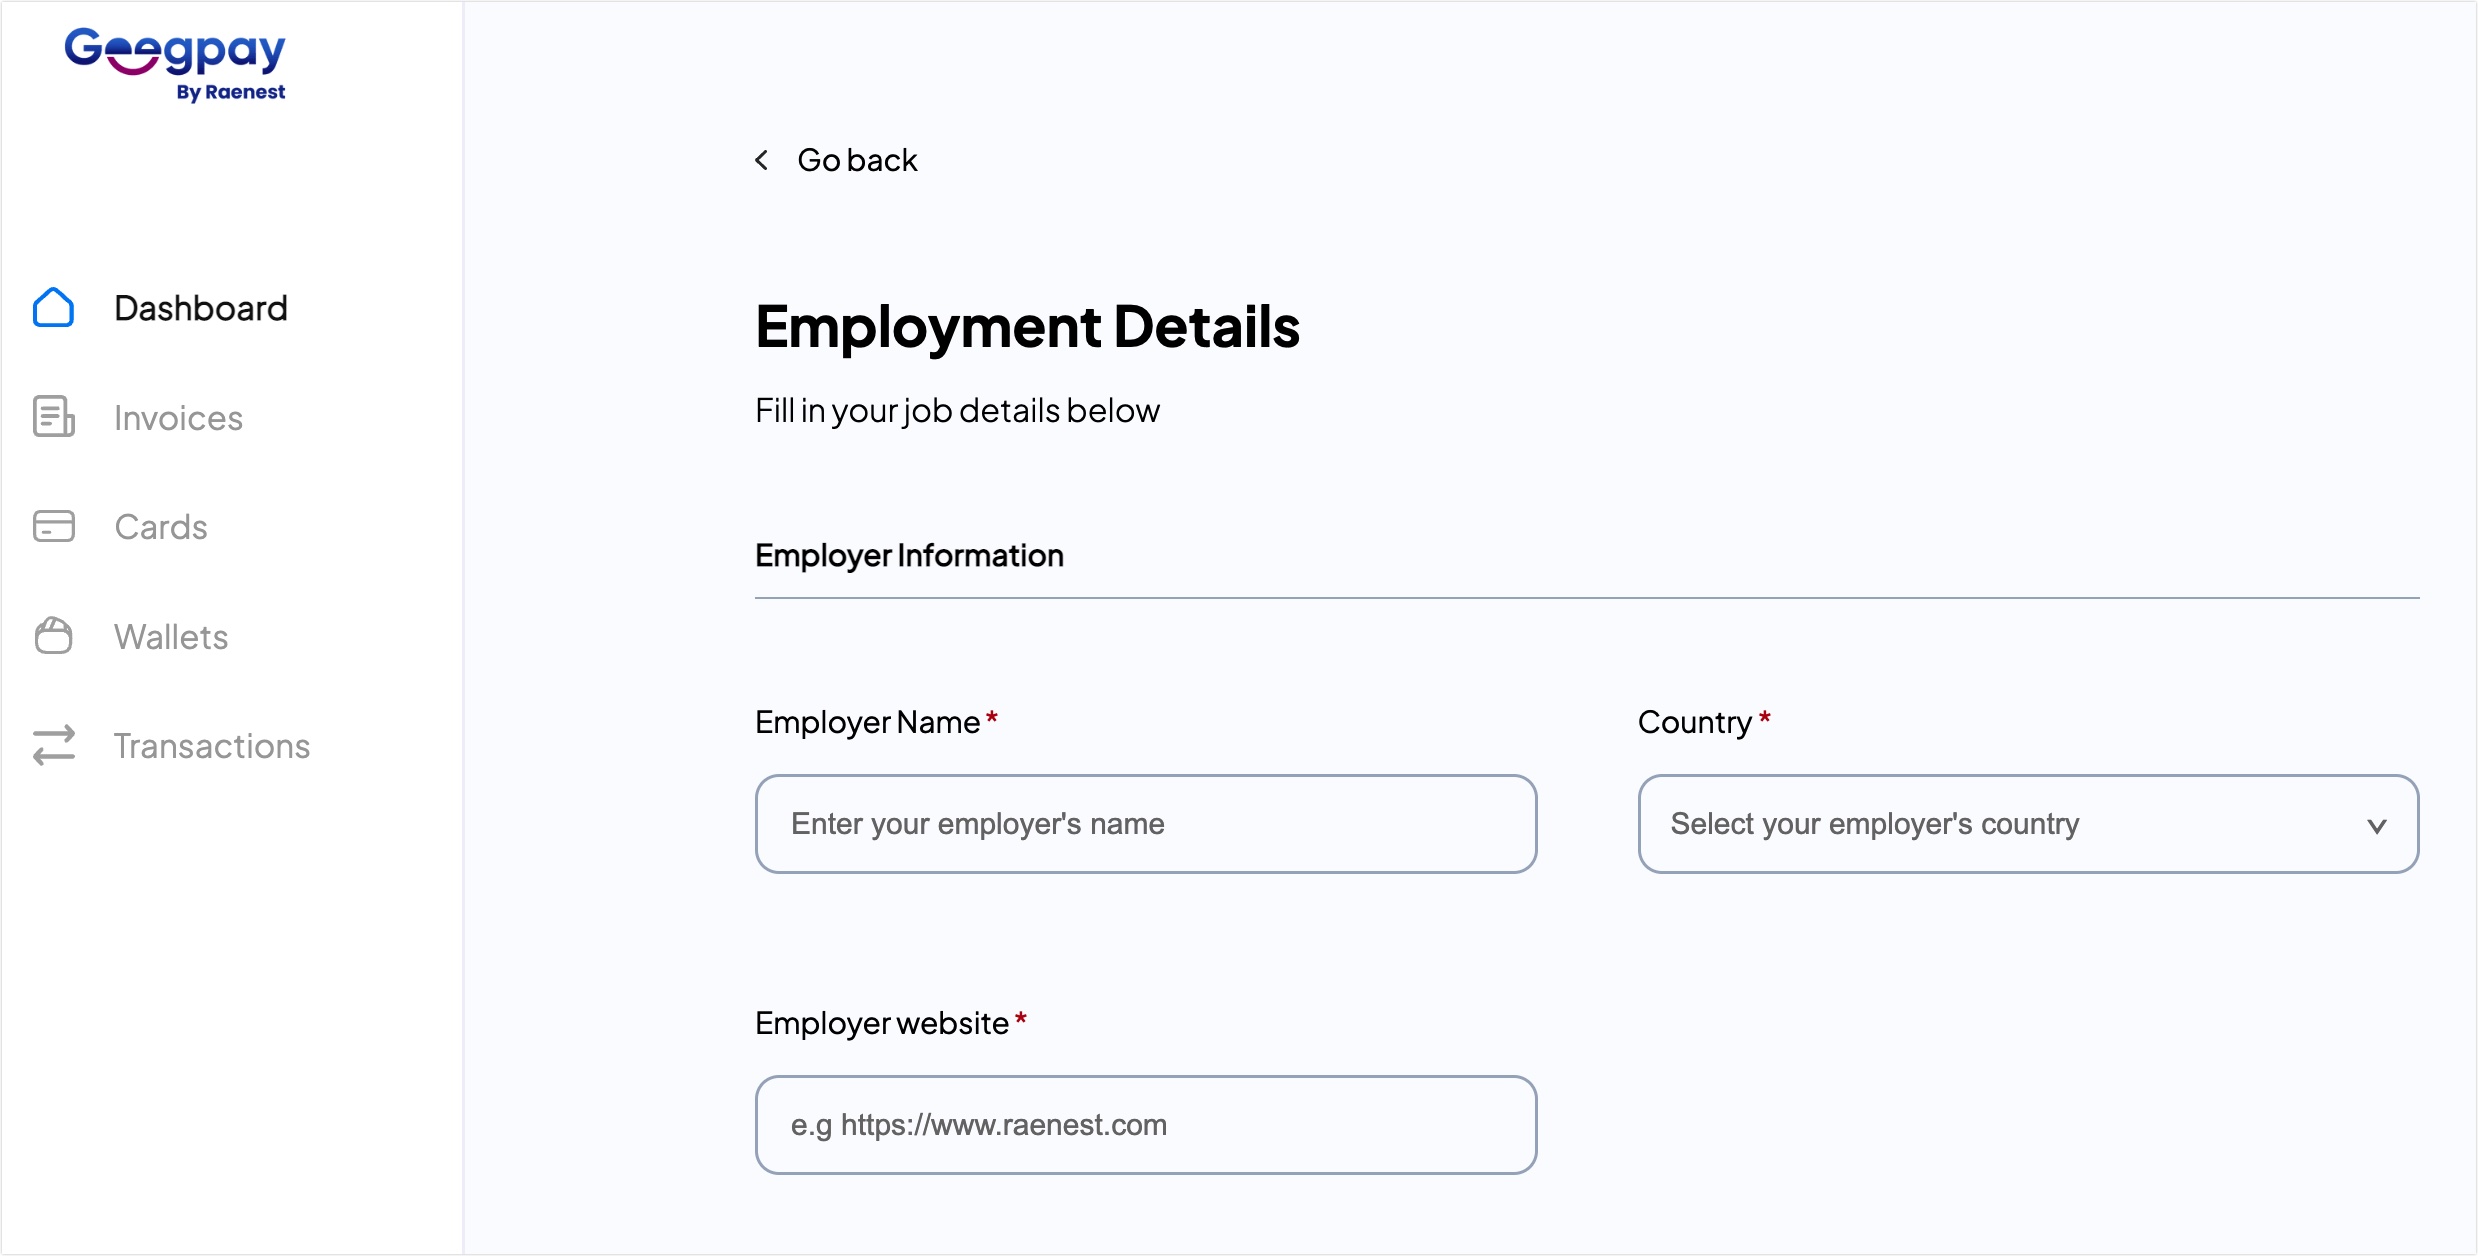 Enter employment details